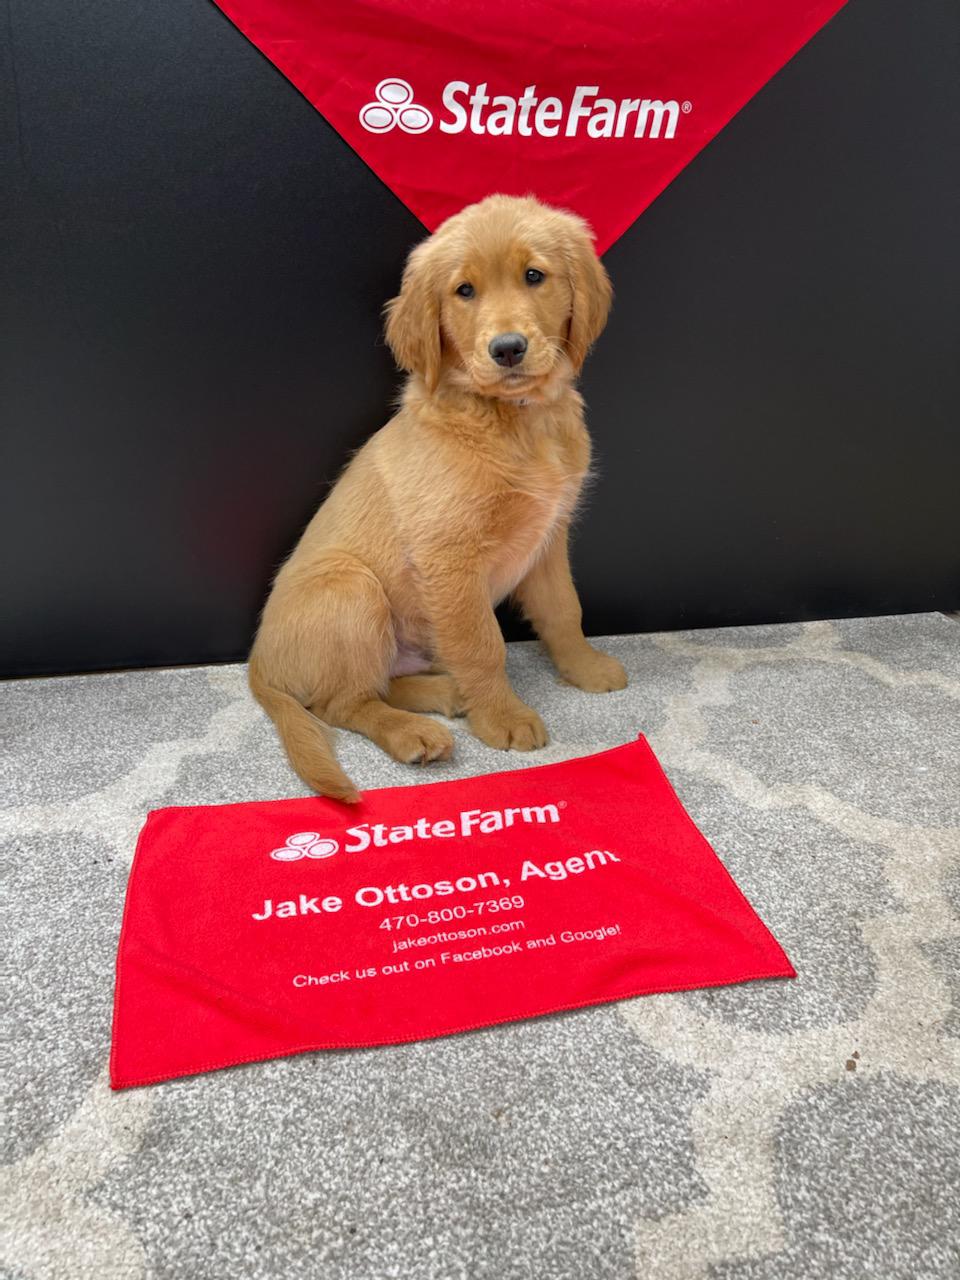 Jake Ottoson - State Farm Insurance Agent